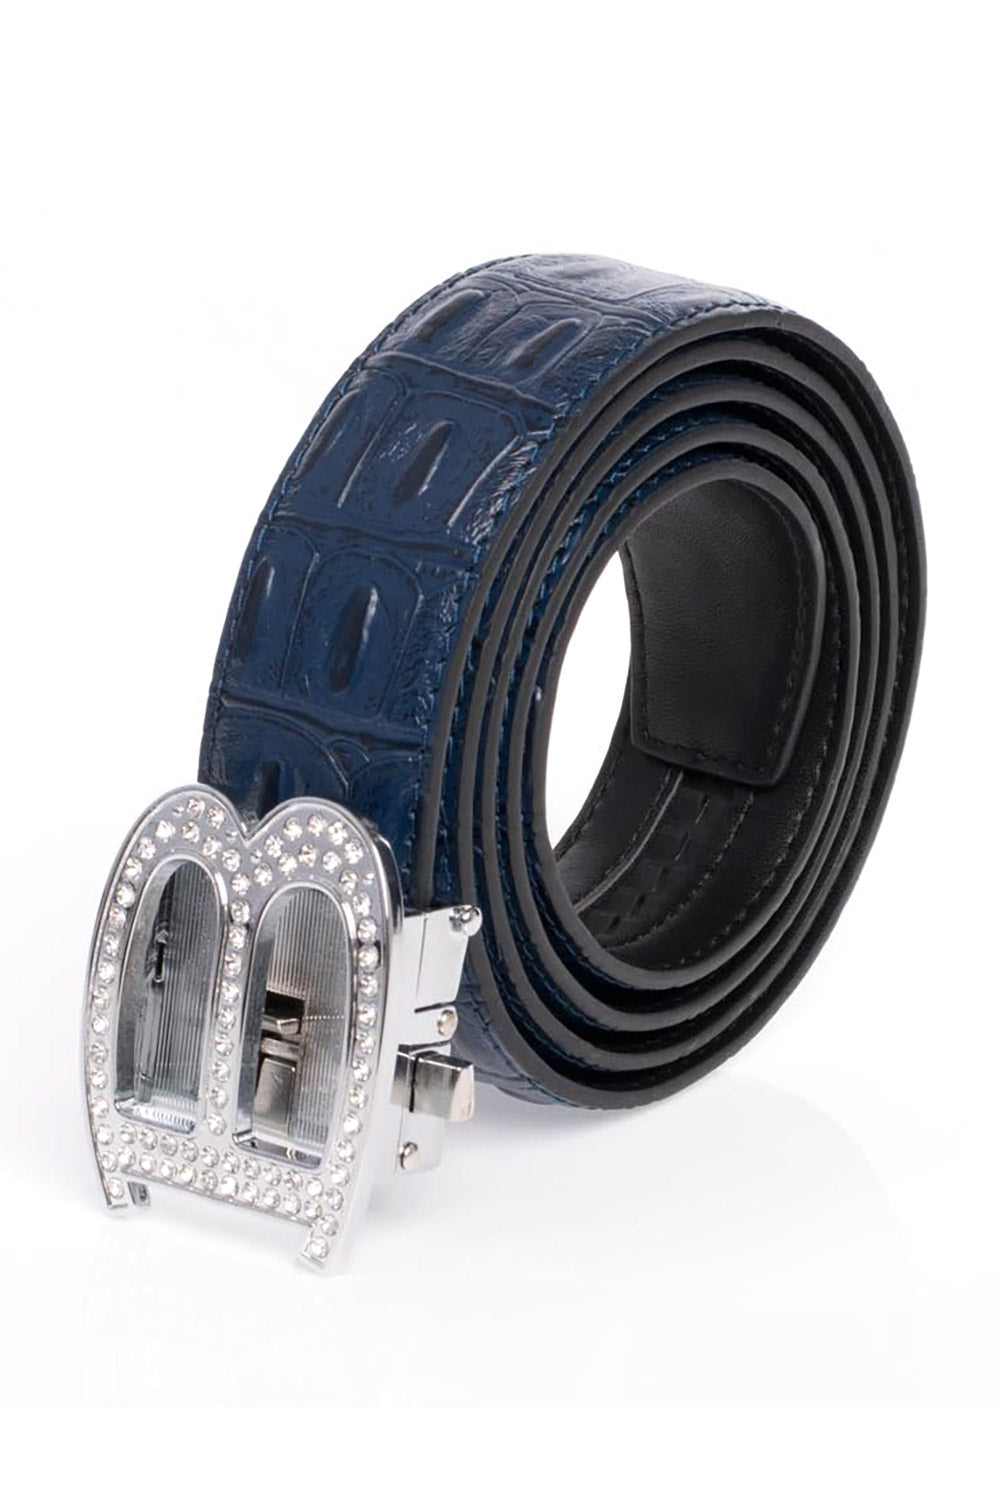 Barabas "B" Shiny Silver/Blue Croc Adjustable Luxury Leather Dress Belt